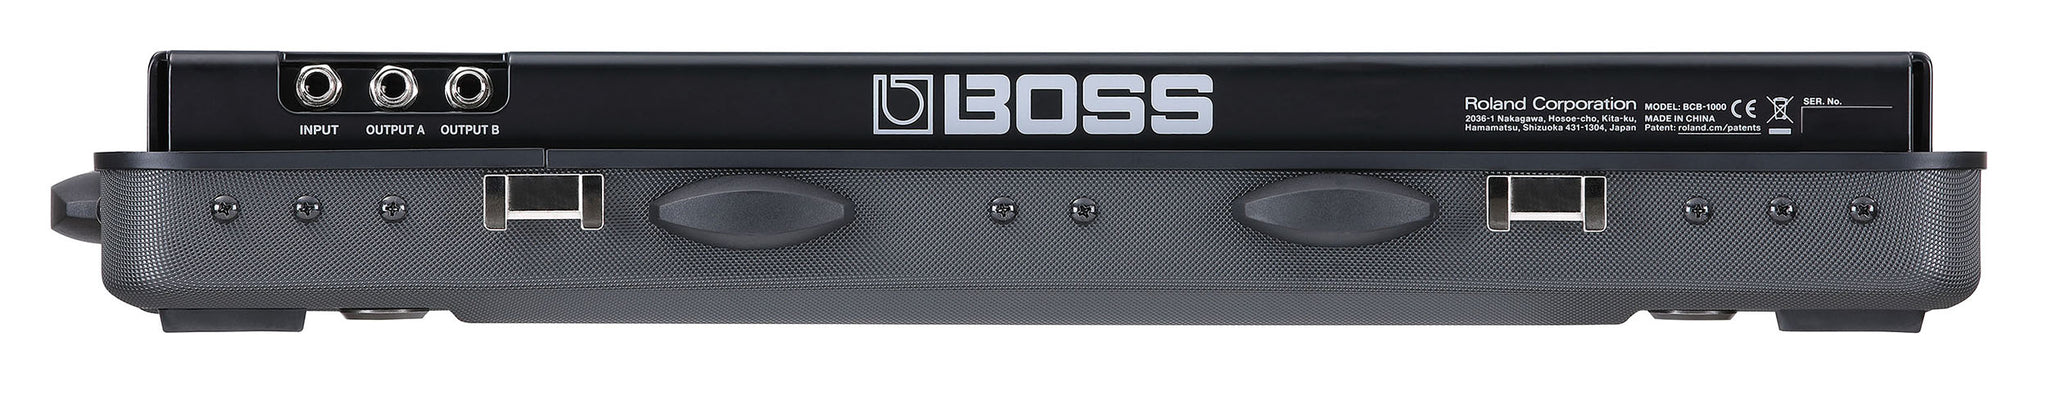 BOSS BCB-1000 Pedal Board